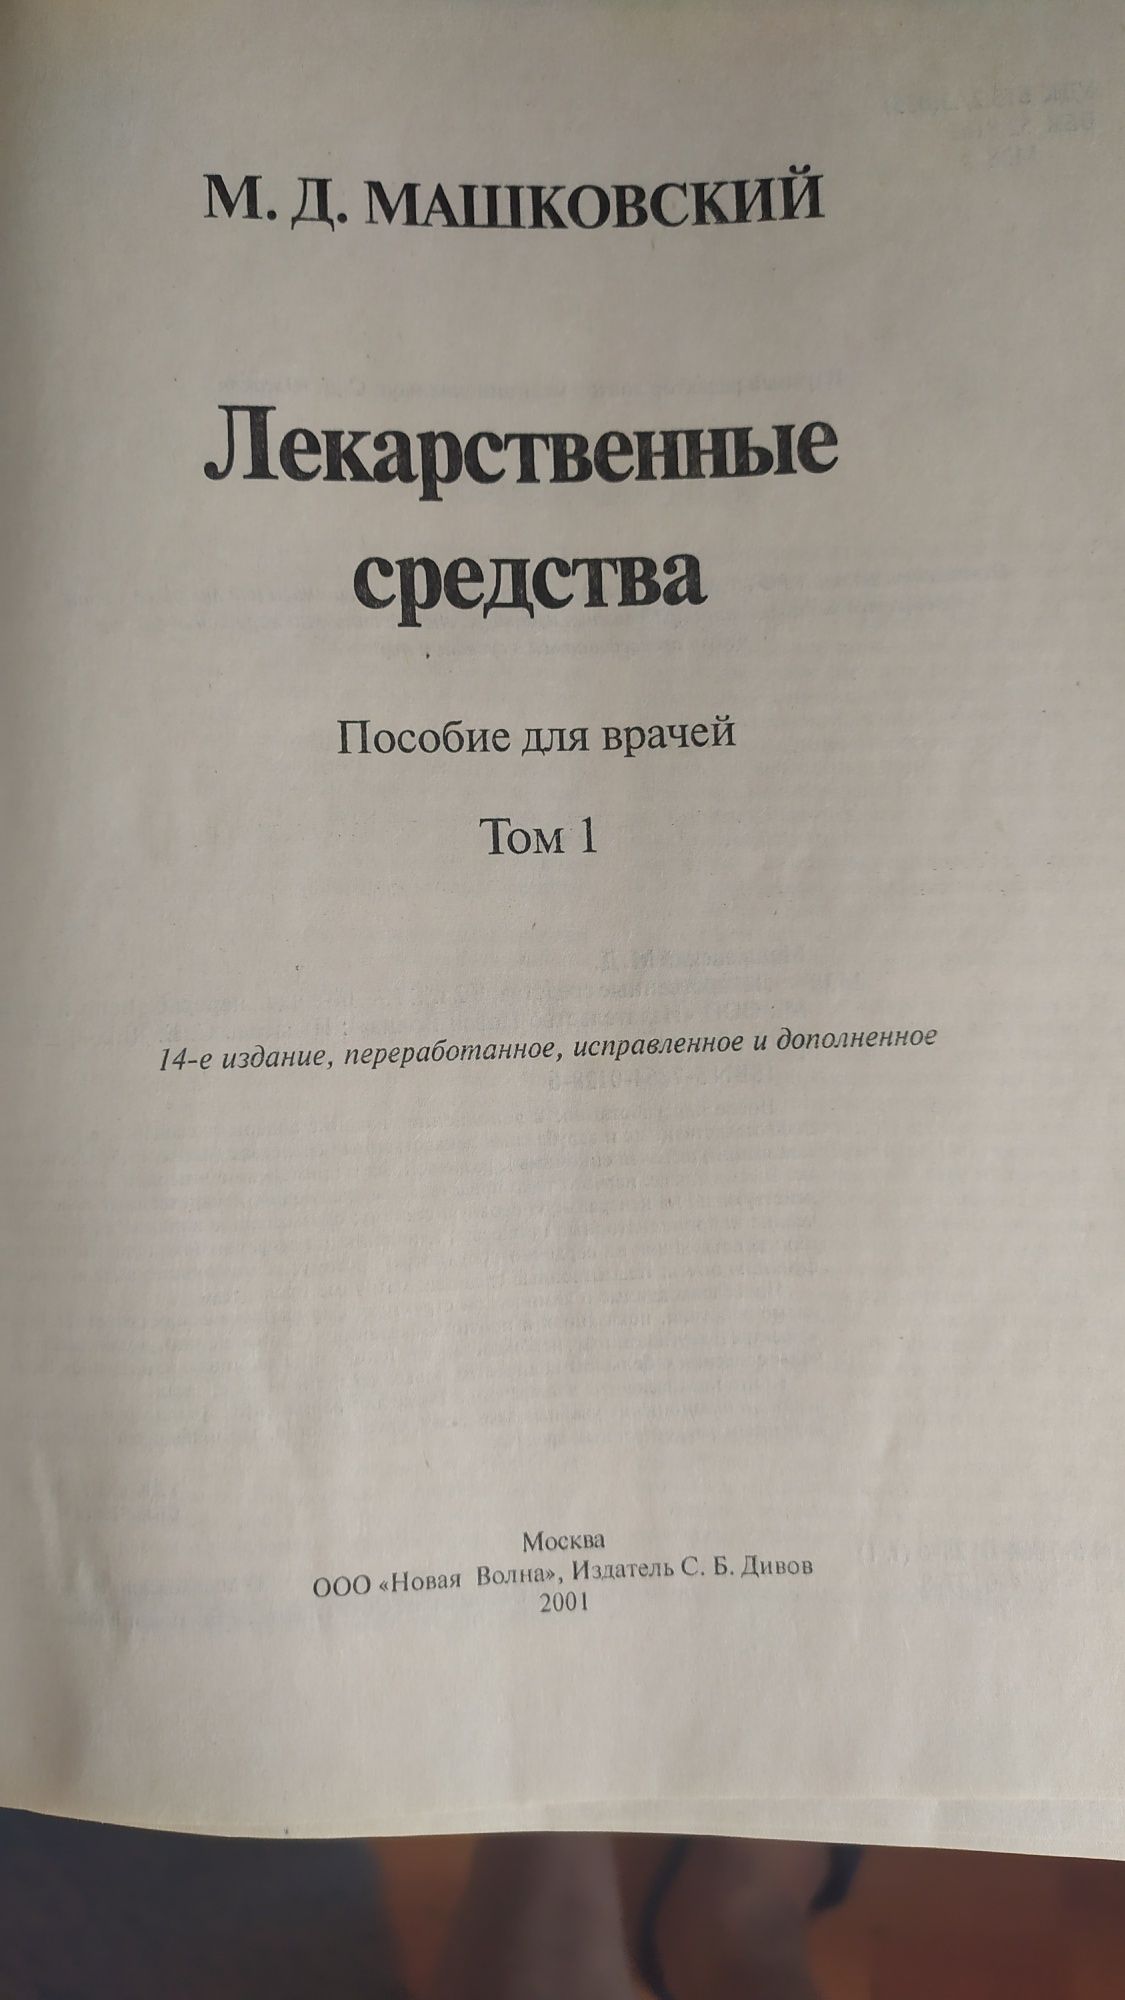 Продаю два тома Машковского М. Д. по медицине